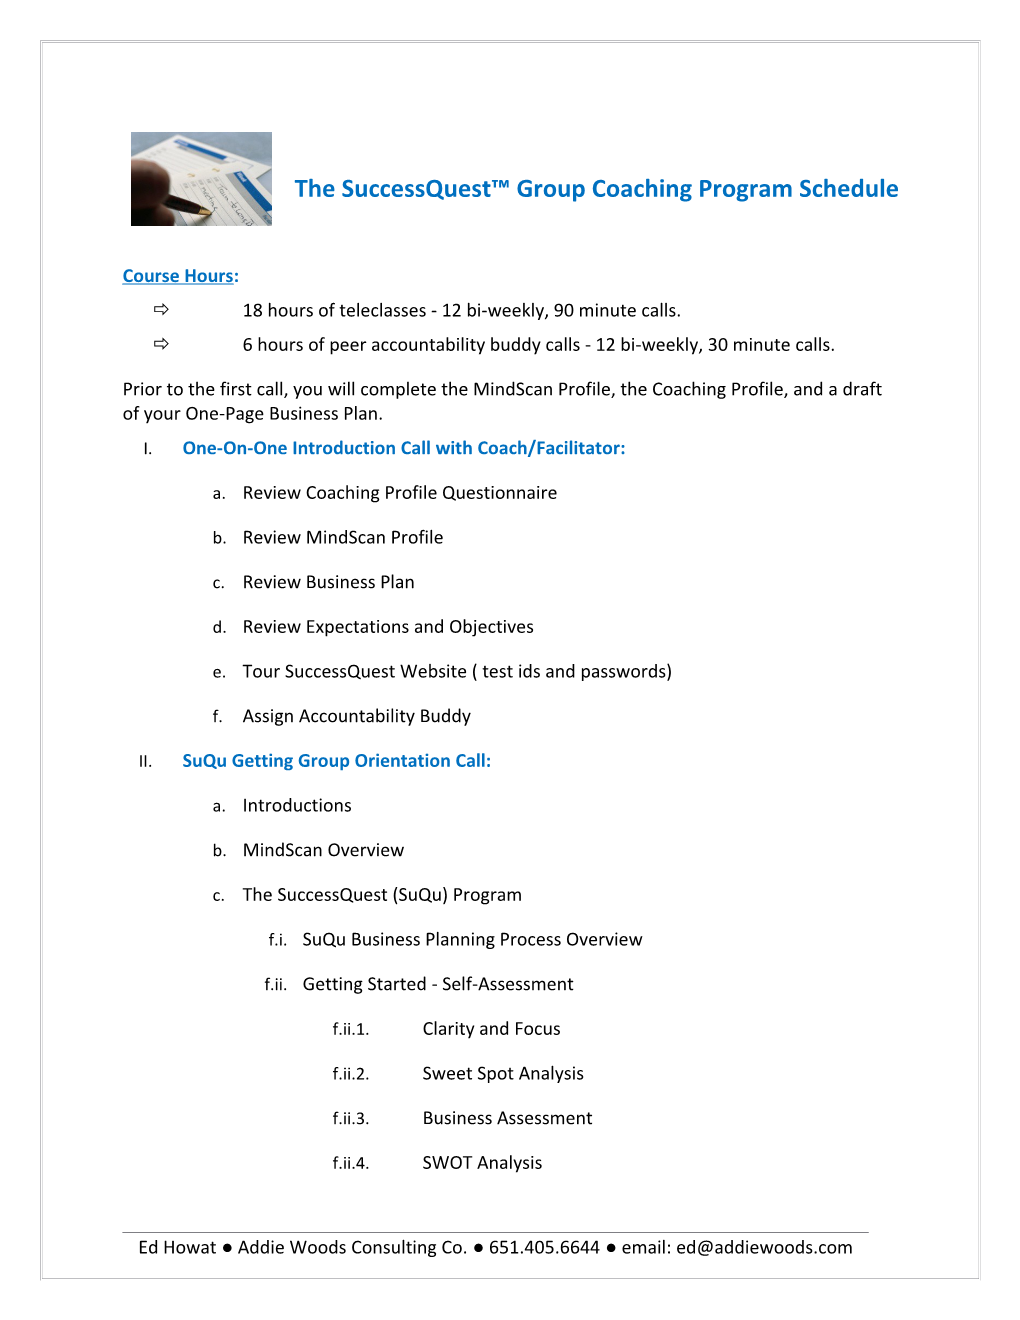 The Successquest Group Coaching Program Schedule